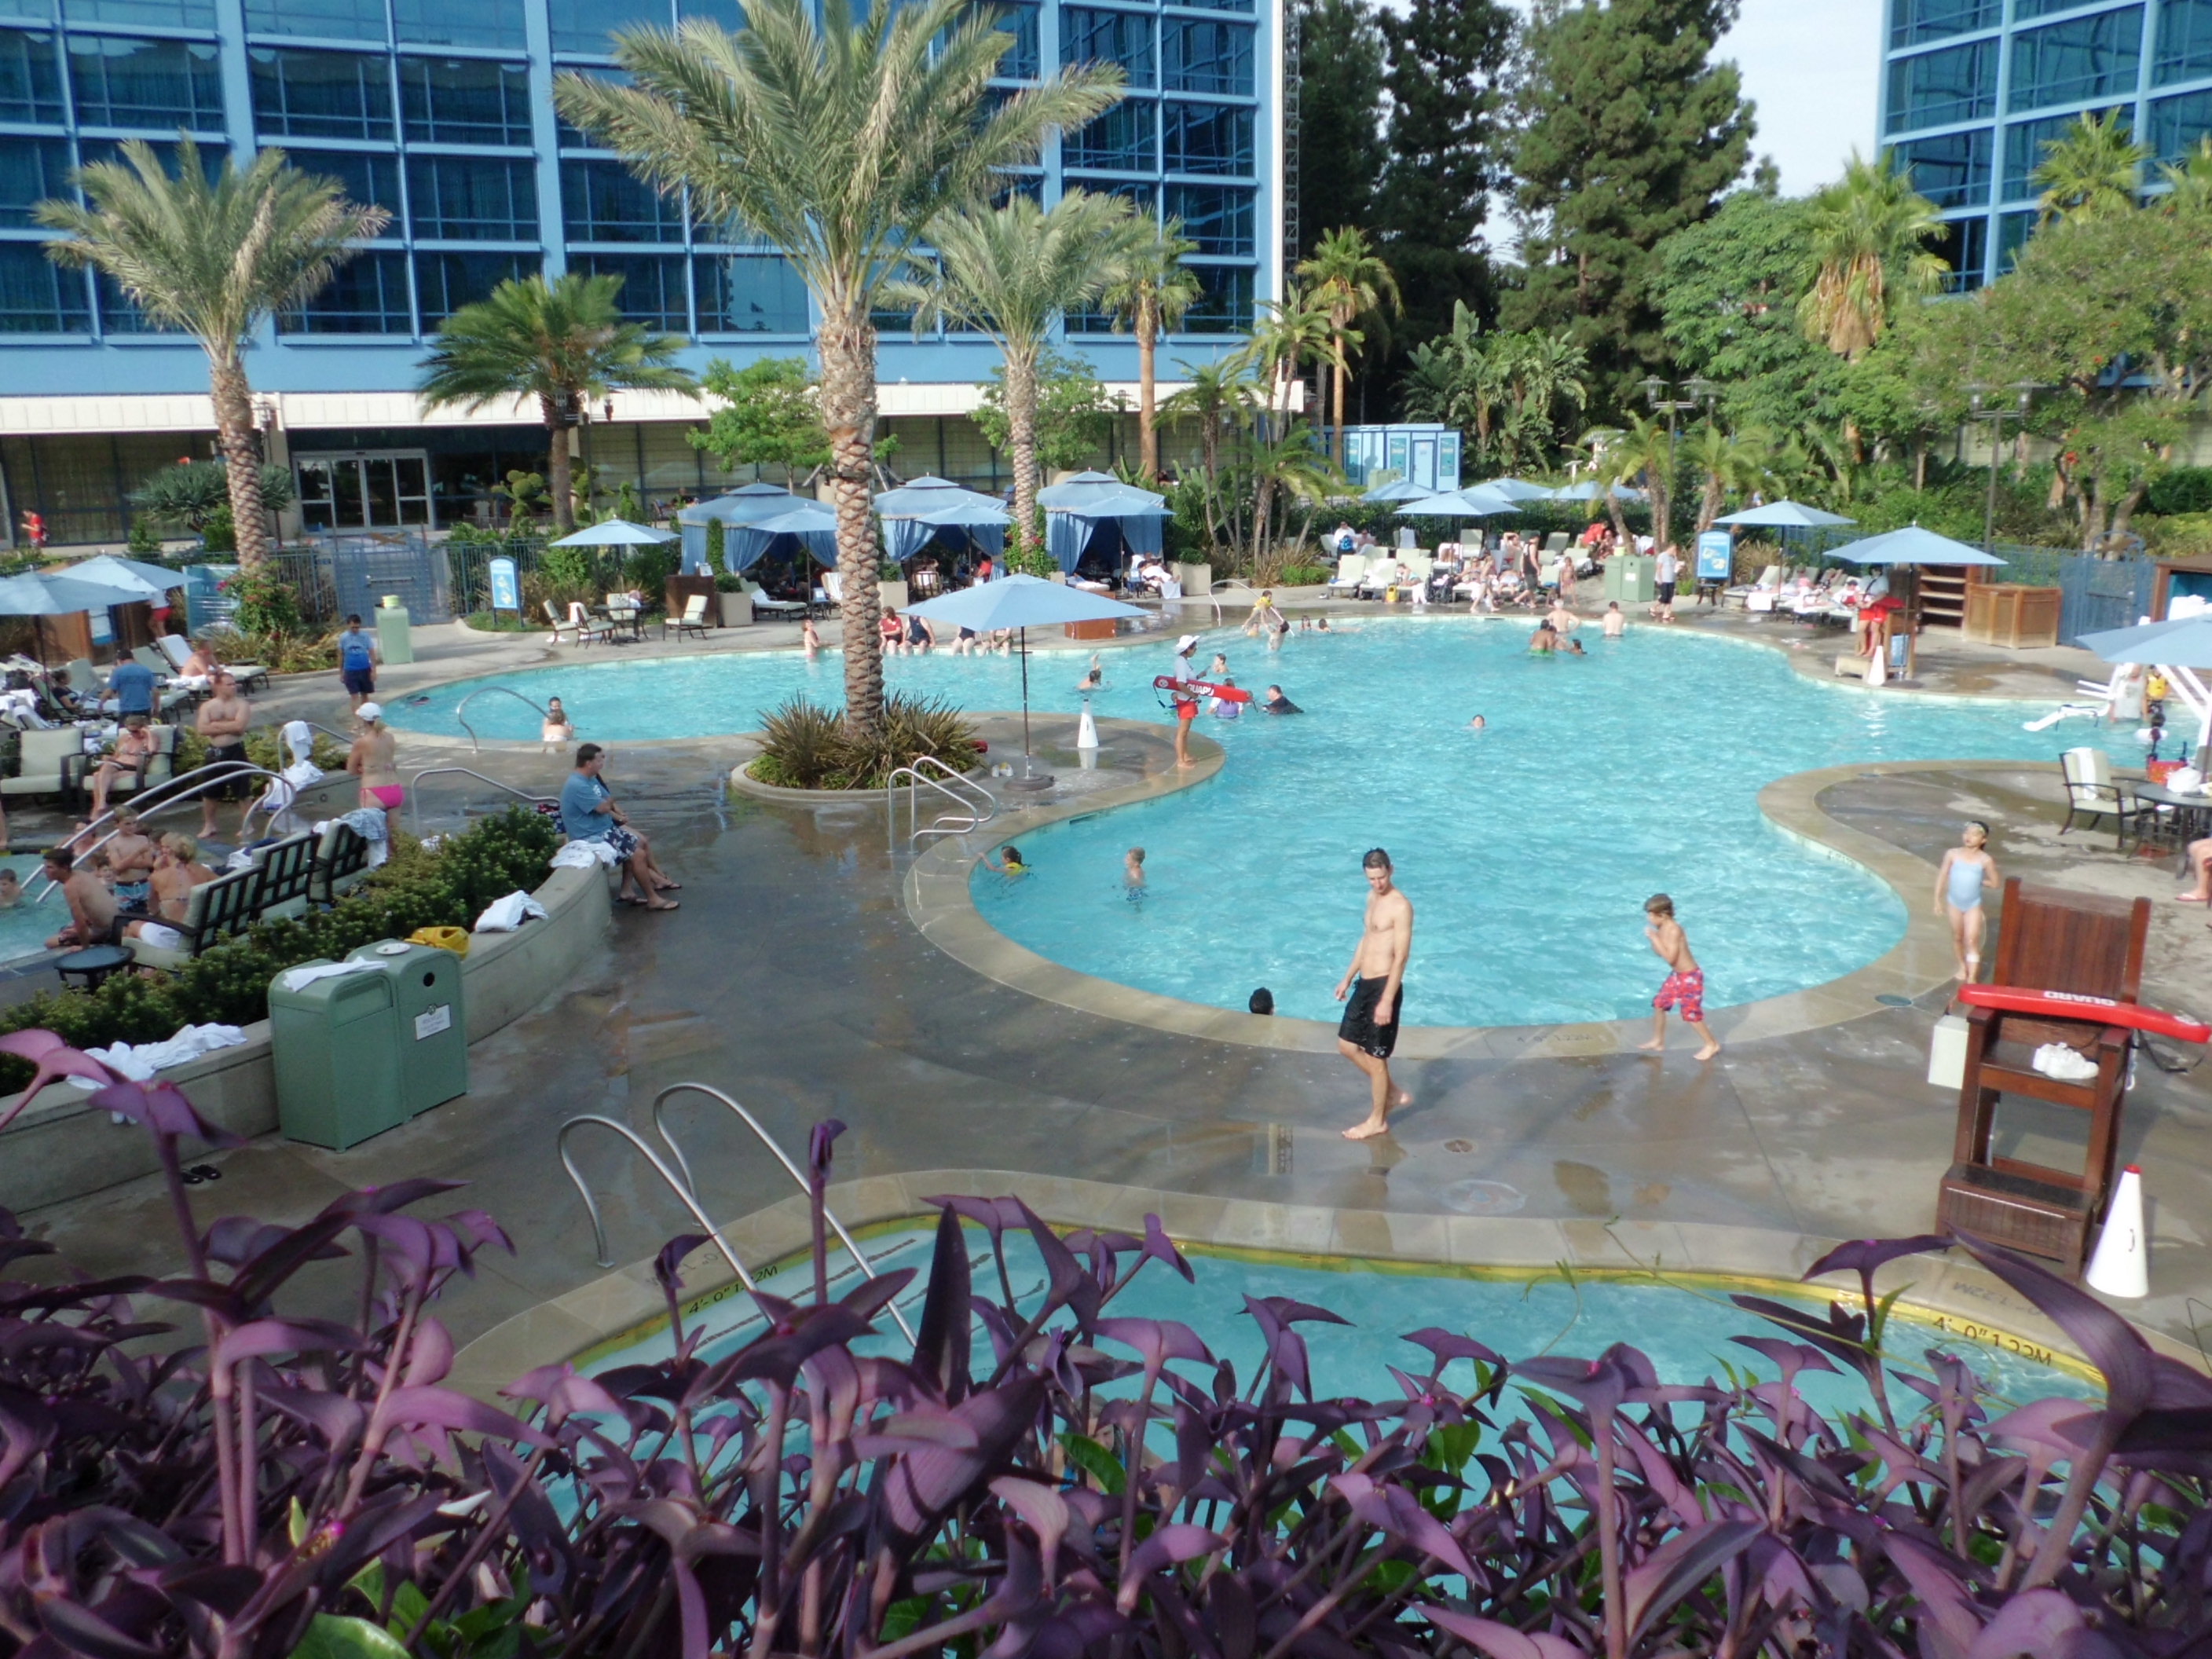 DISNEYLAND HOTEL, ANAHEIM, CALIFORNIA – HotelSwimmingPools.com